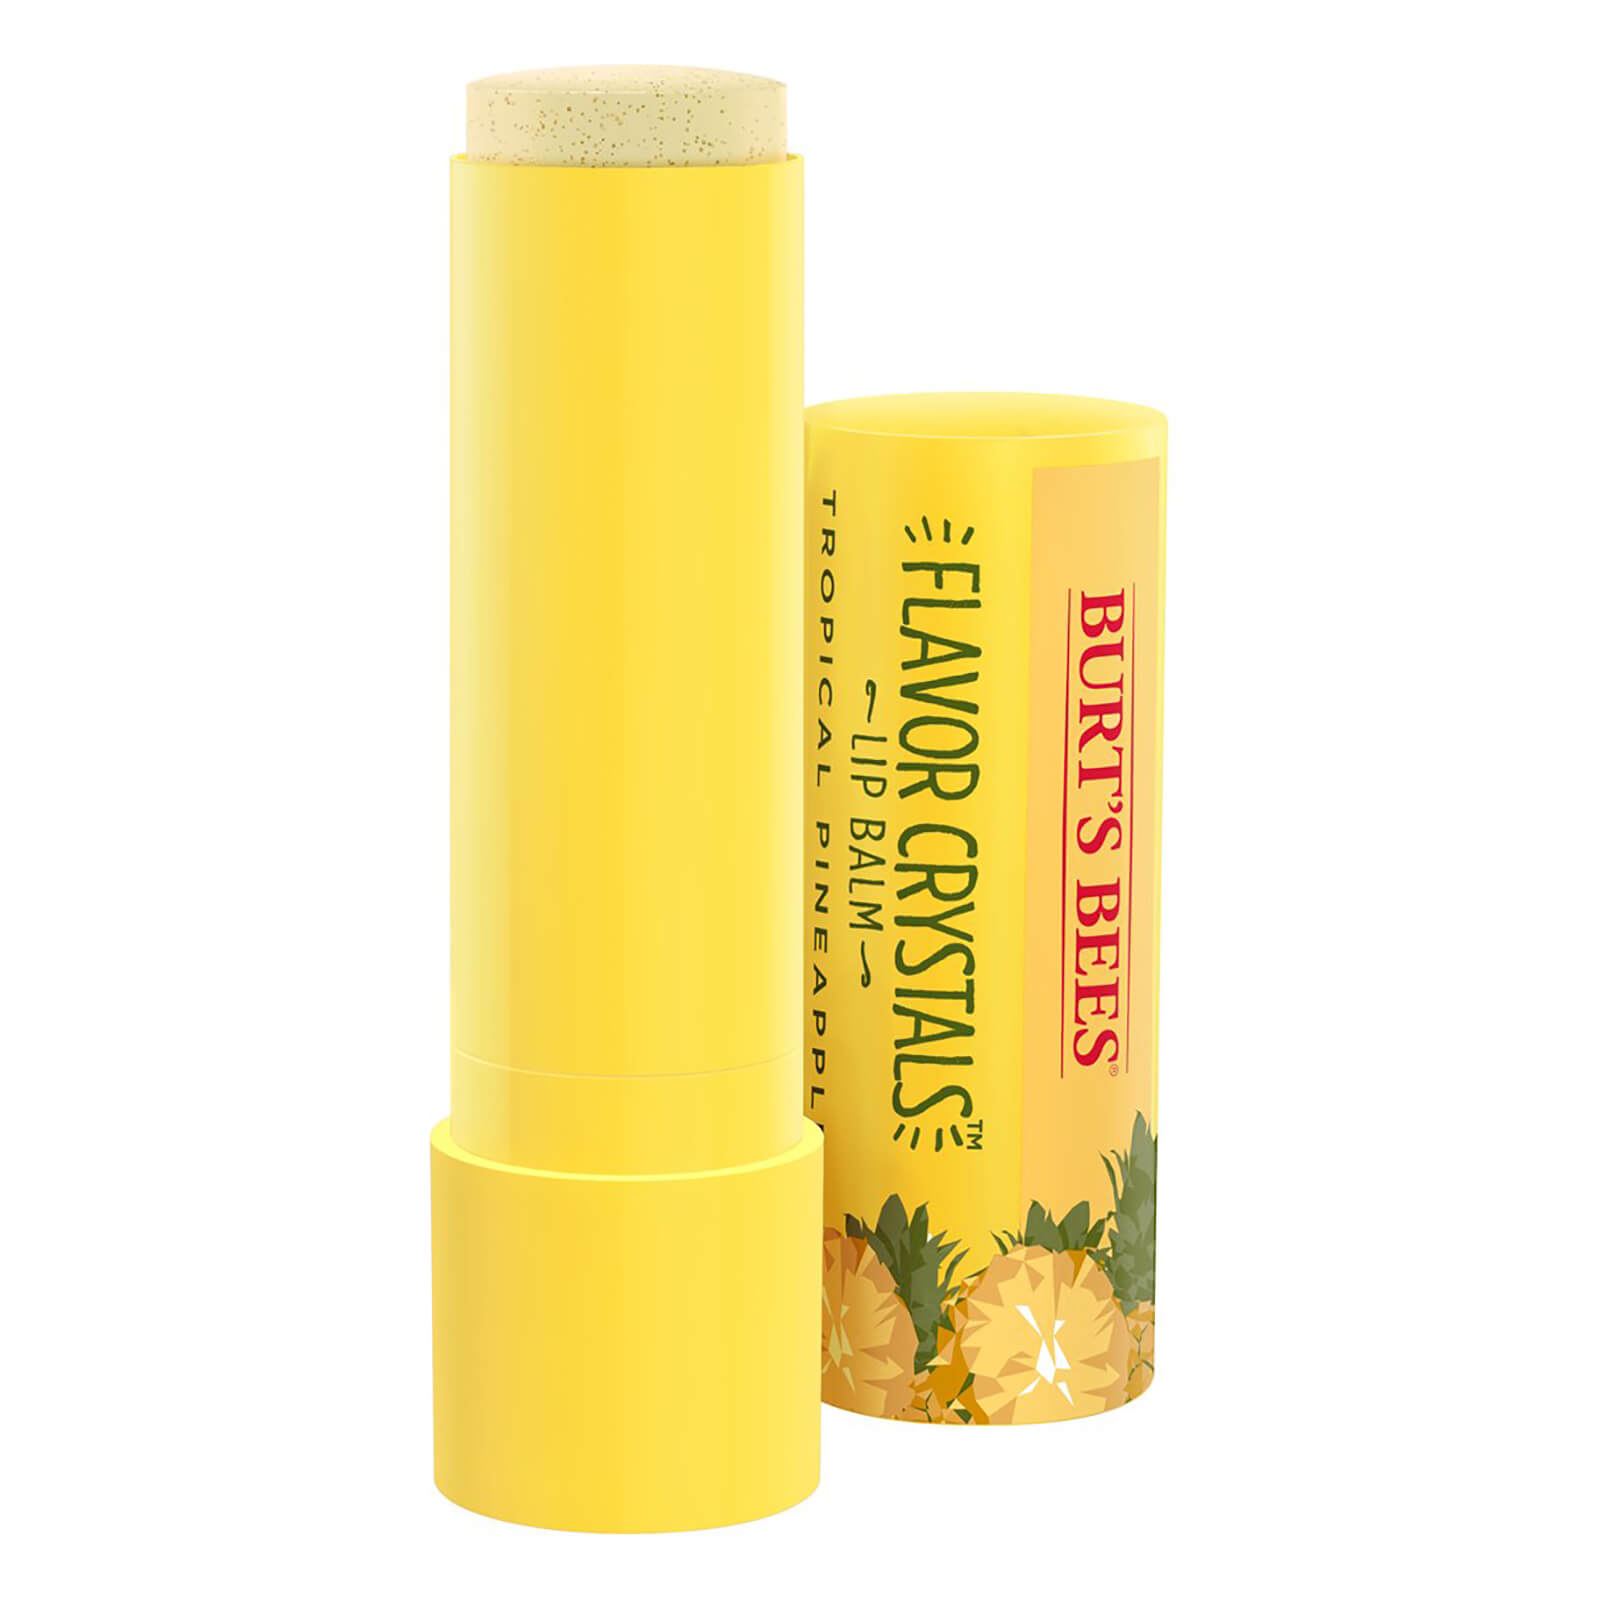 Burt's Bees Flavour Crystals 100% Natural Moisturising Lip Balm - Tropical Pineapple 4.53g